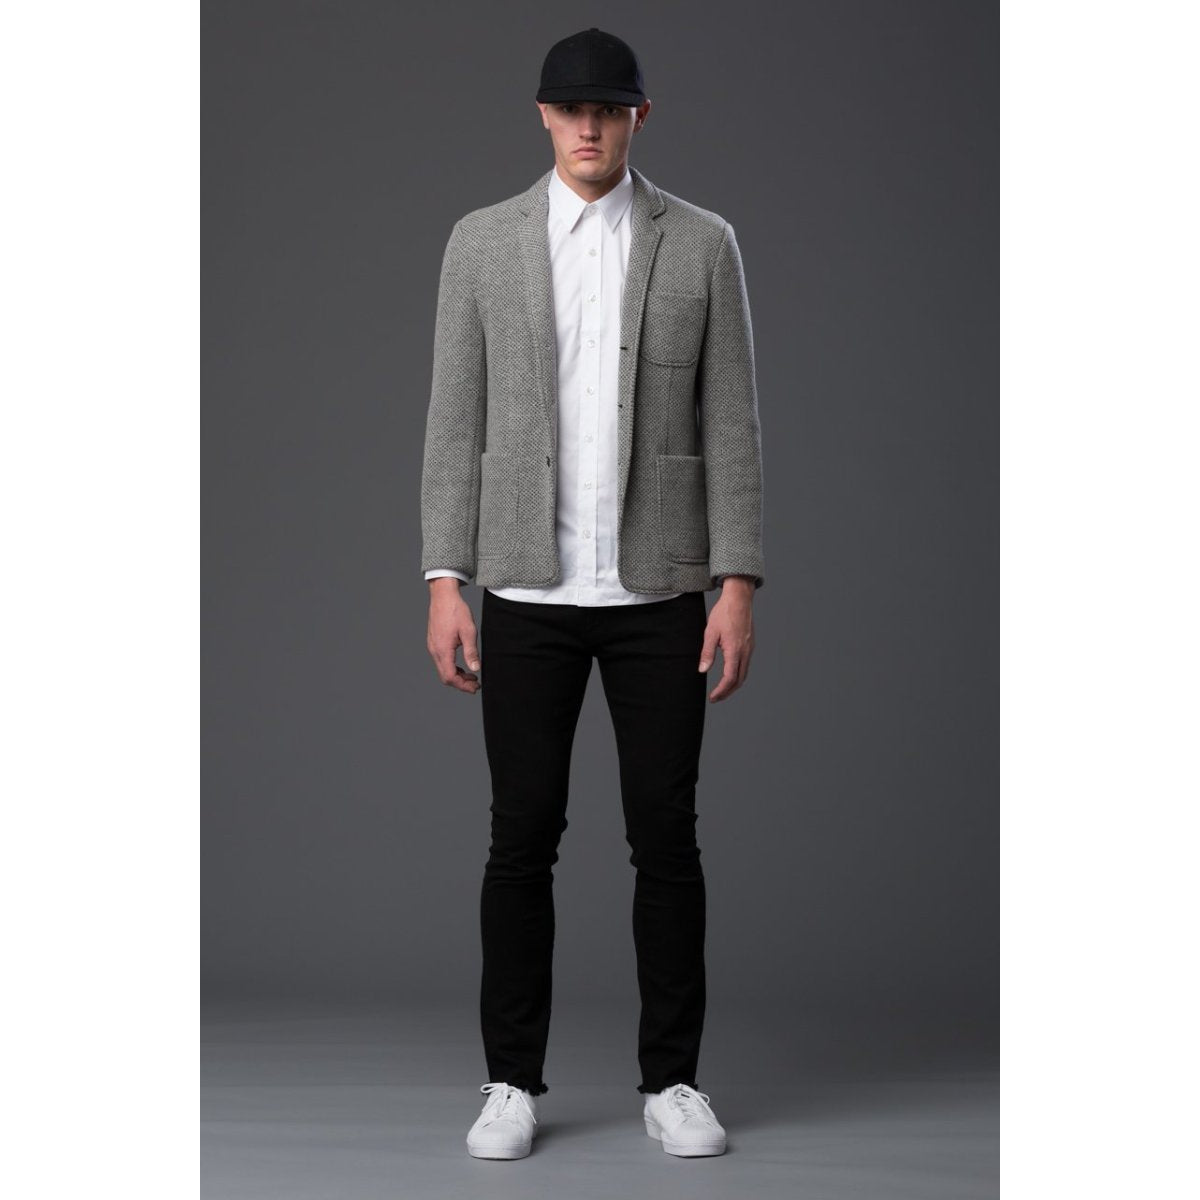 Krammer and Stoudt Grey Wool Jacket